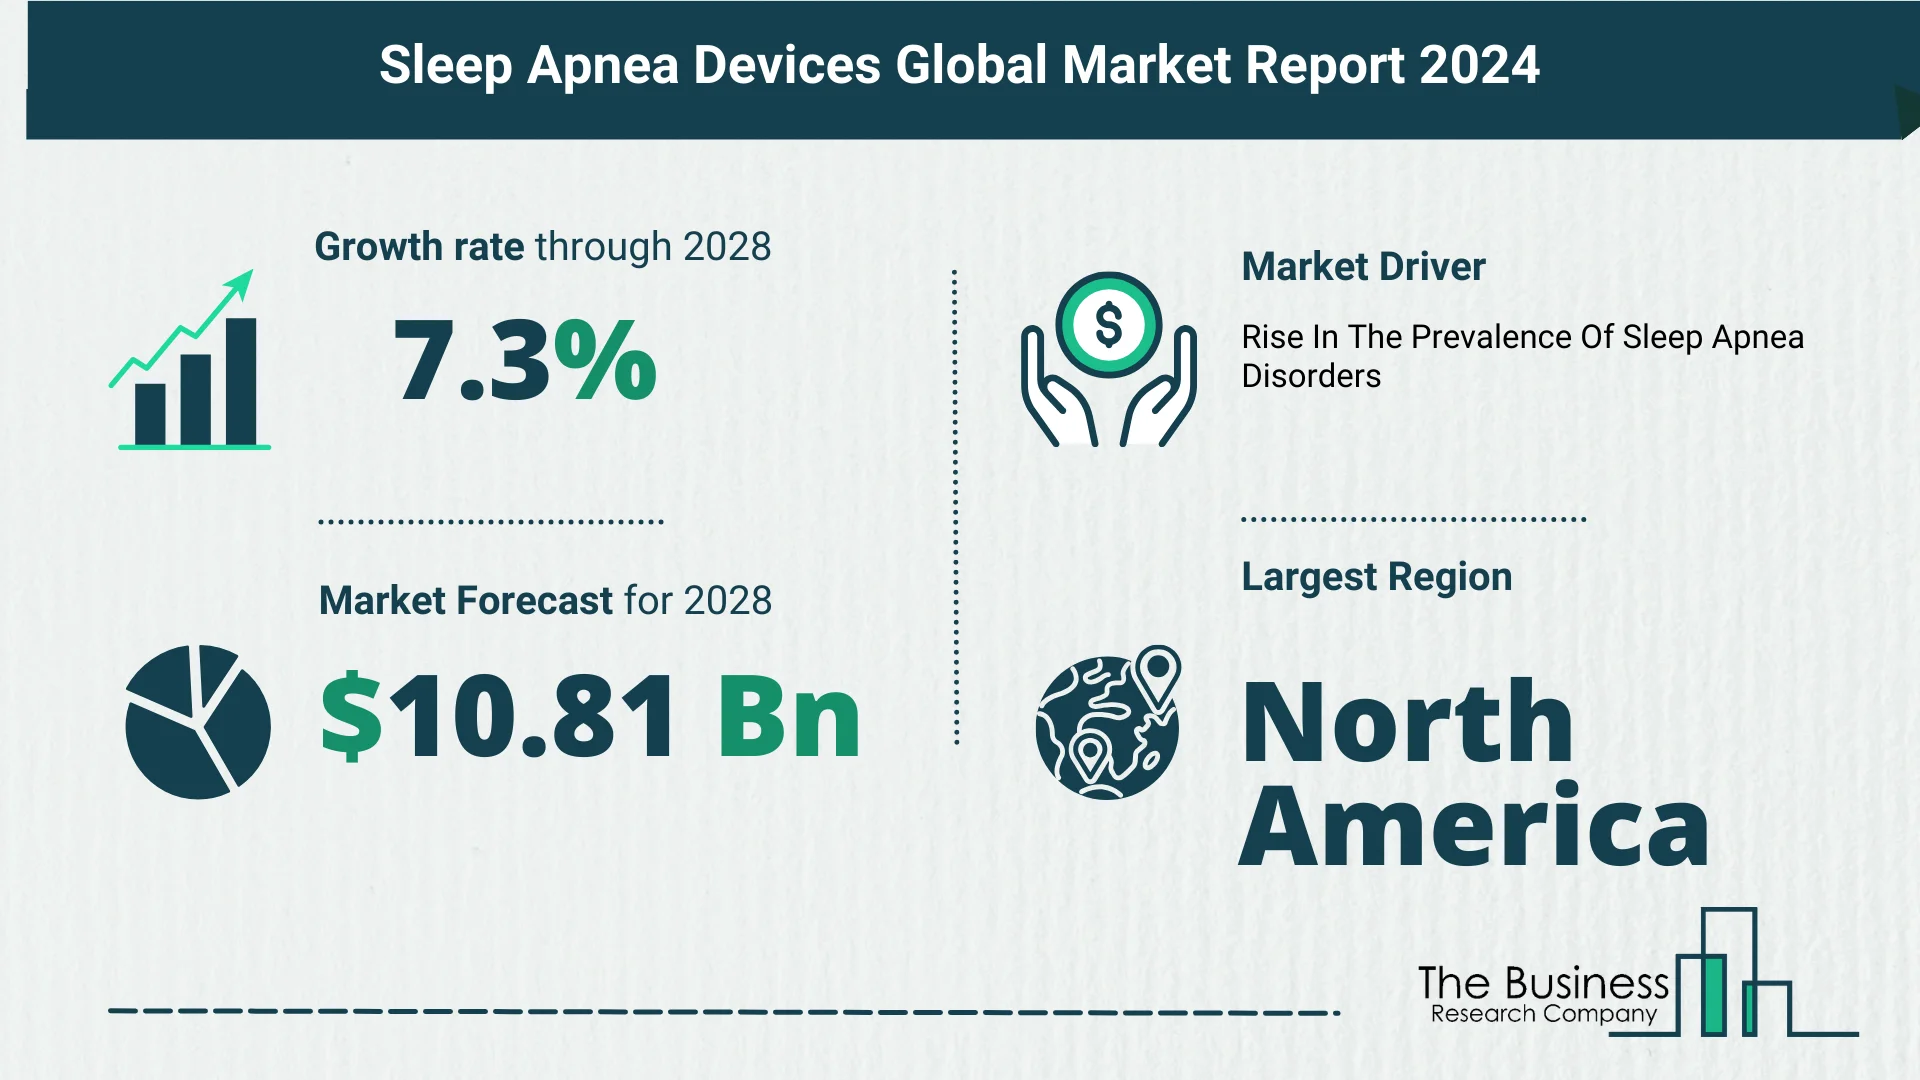 Key Takeaways From The Global Sleep Apnea Devices Market Forecast 2024